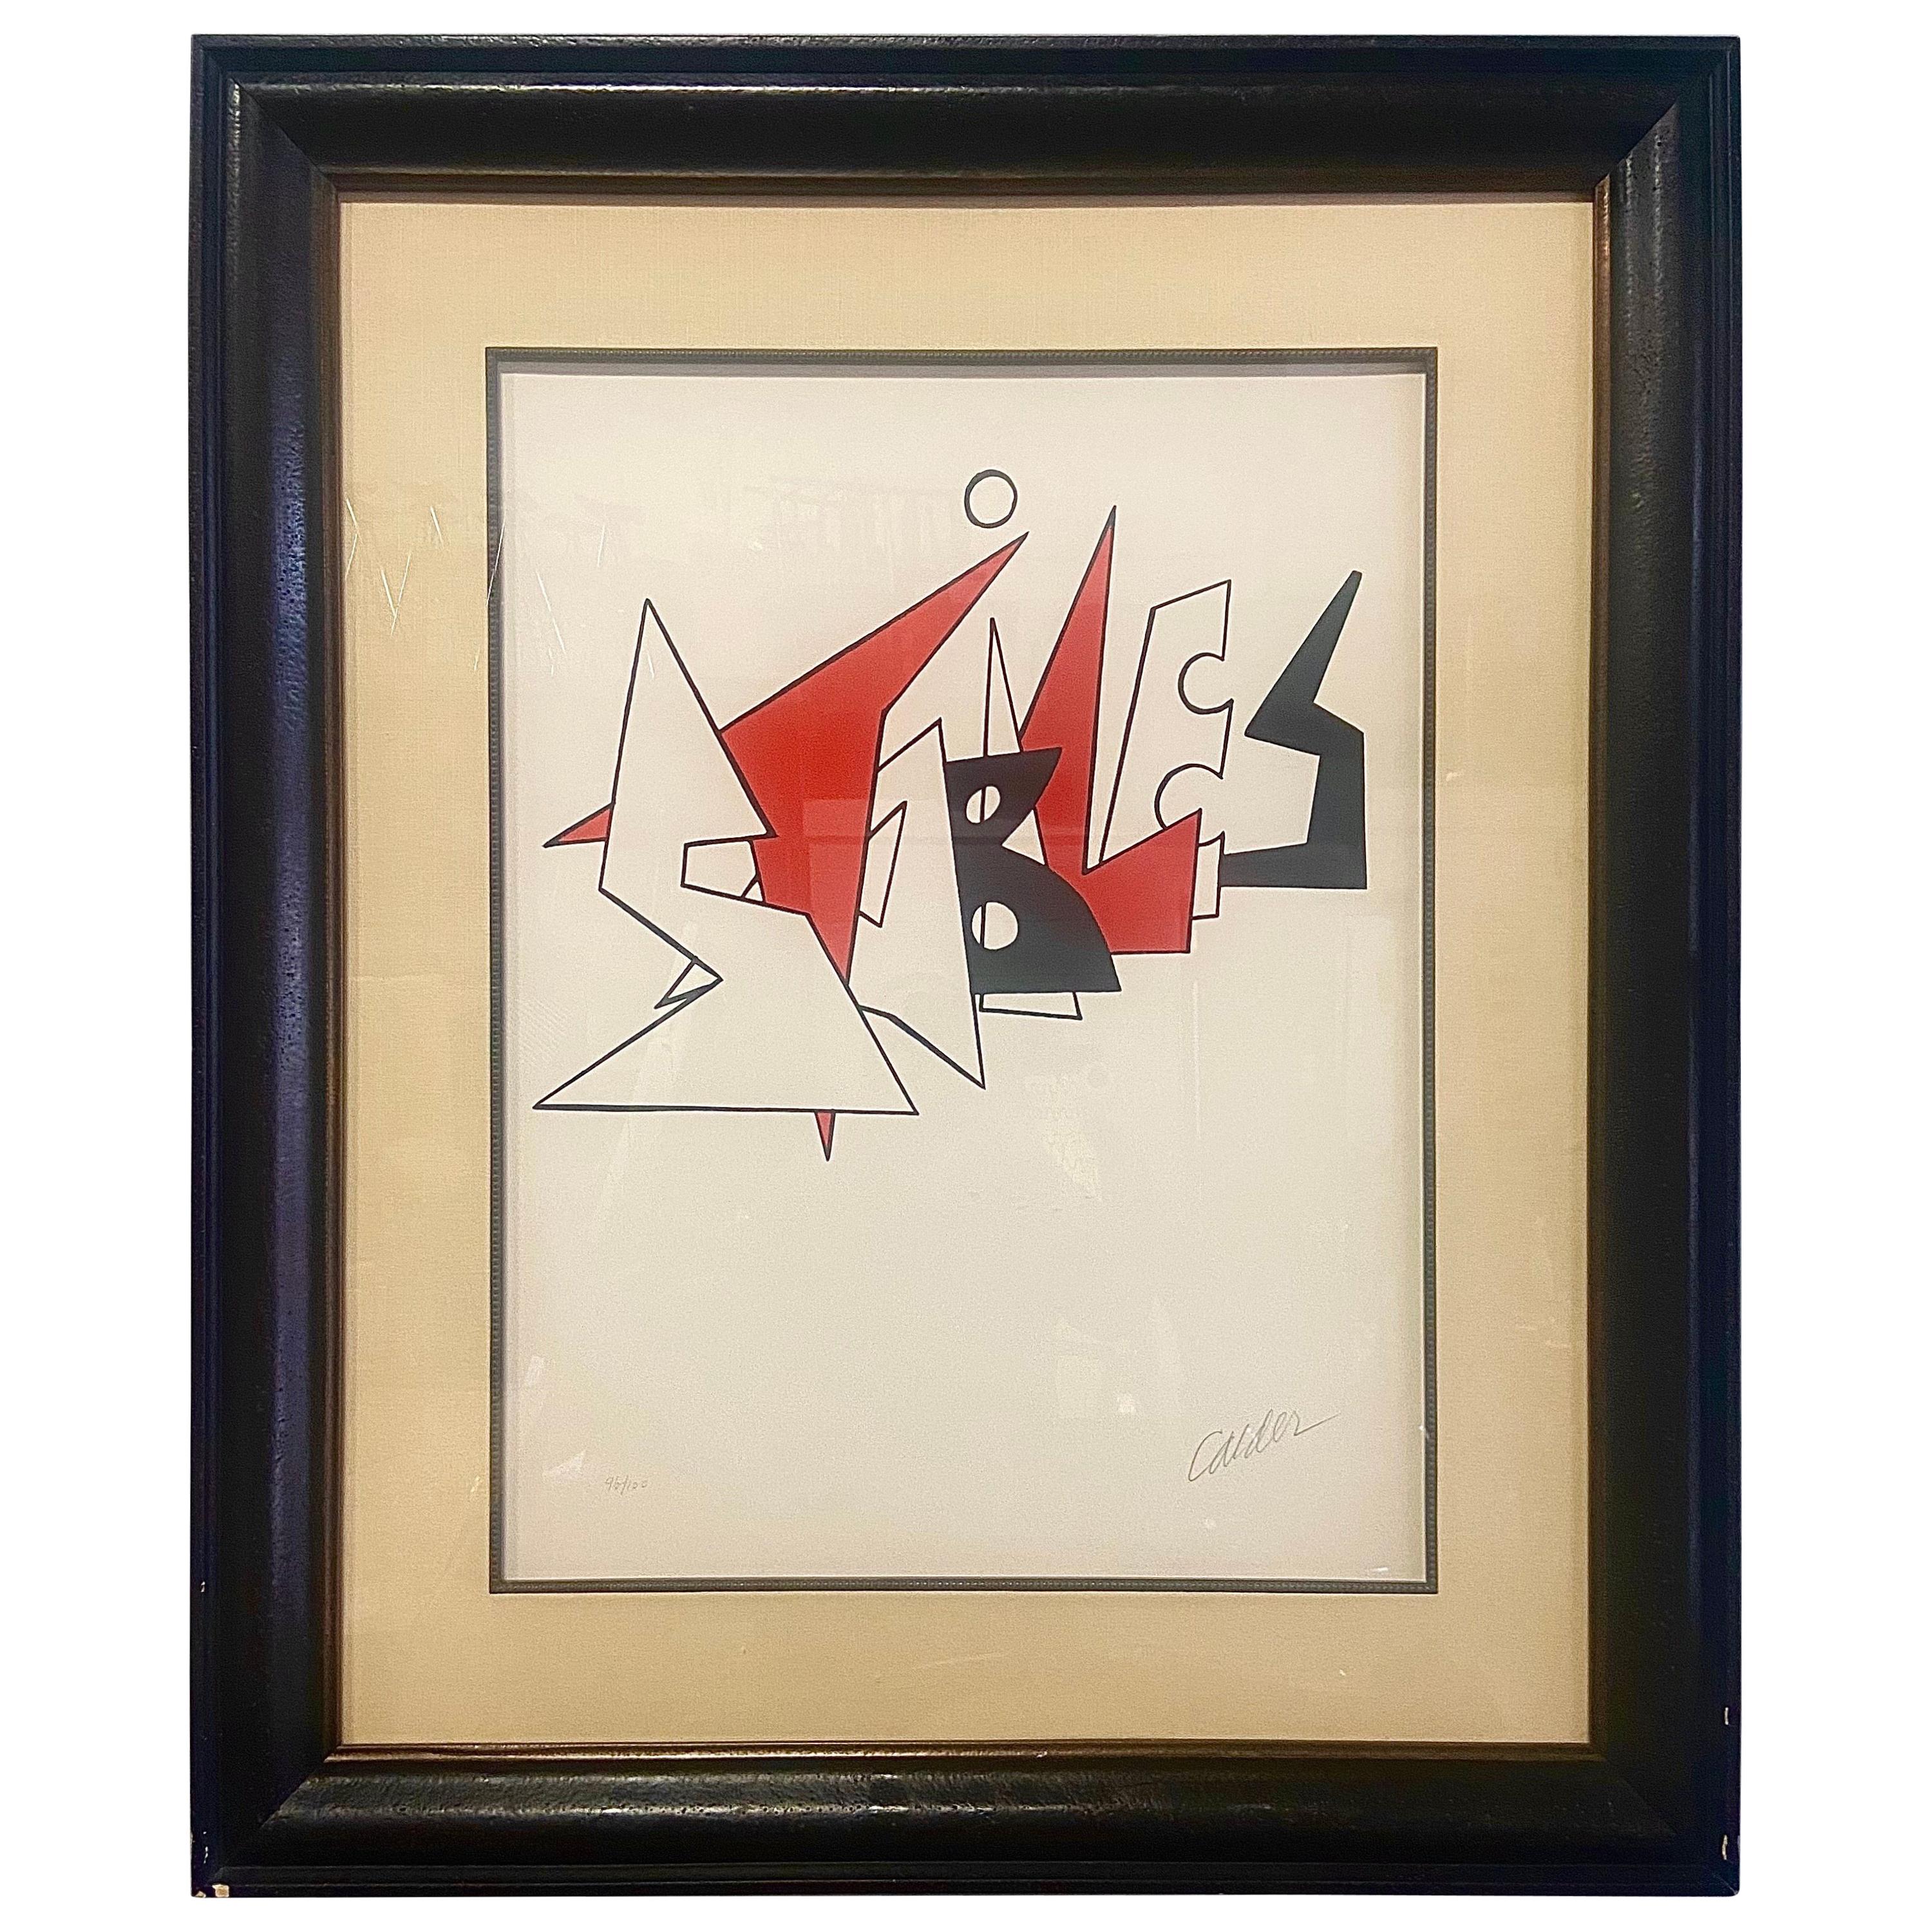 Alexander Calder “Stabiles” Signed Lithograph